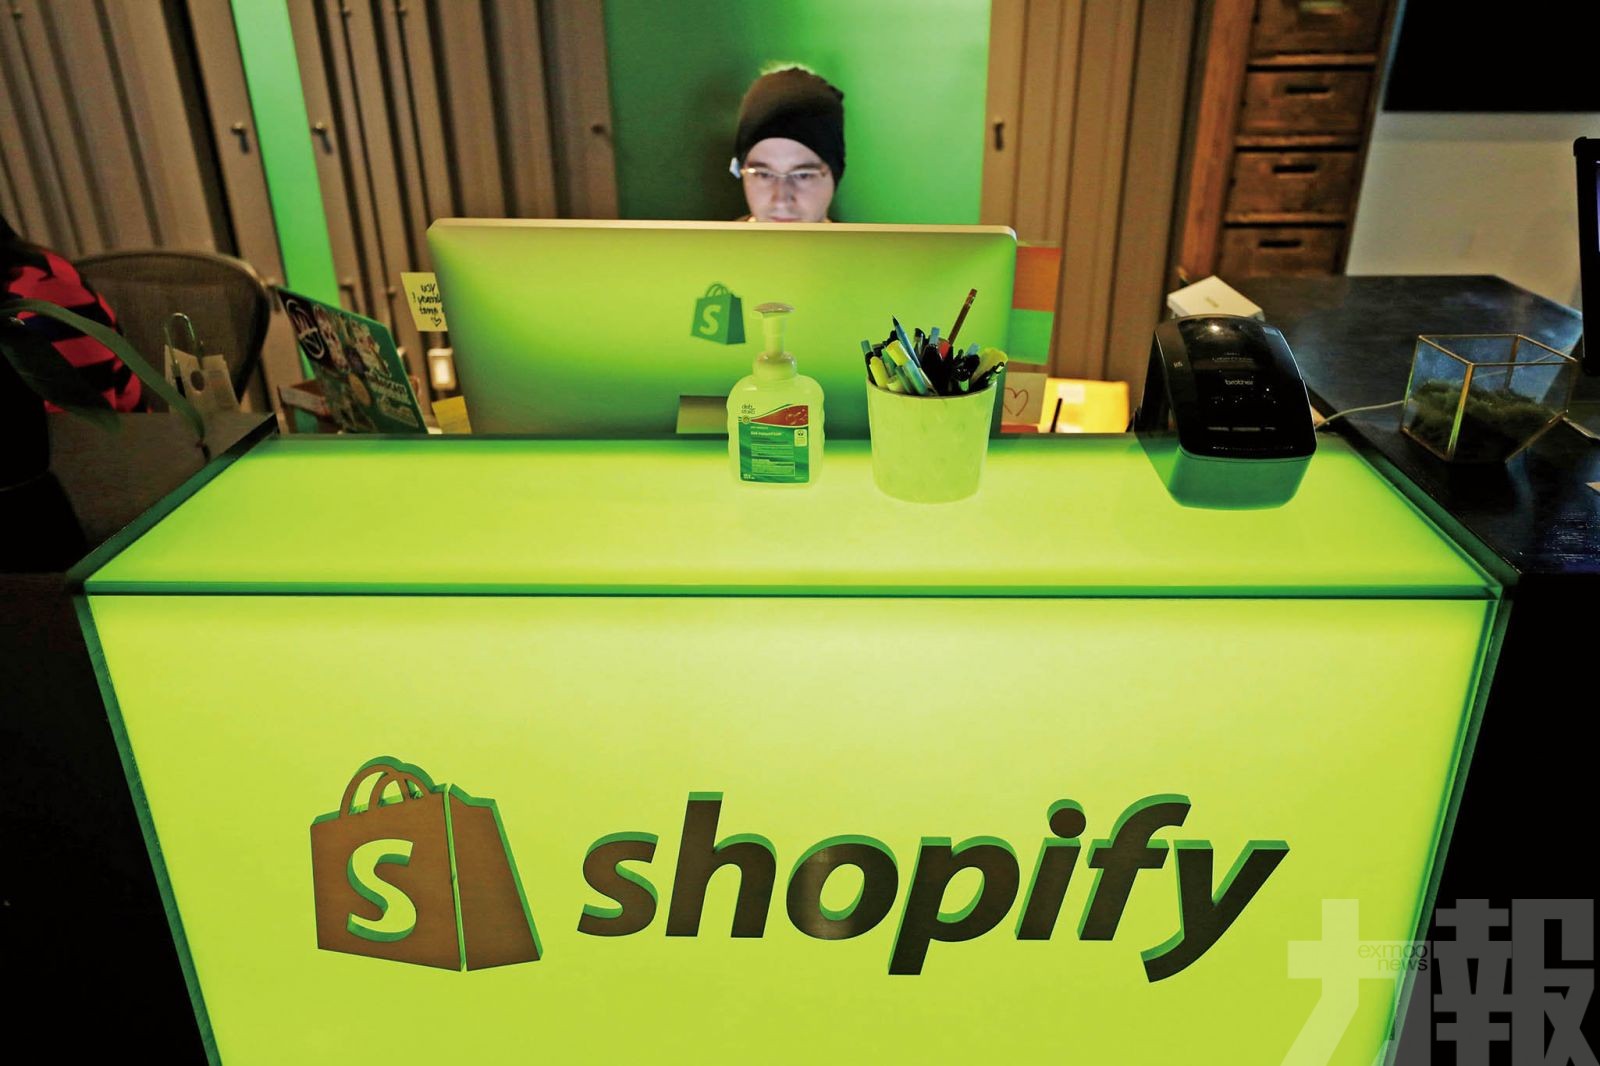 Shopify宣布一拆十  拆股後股價普遍會升？